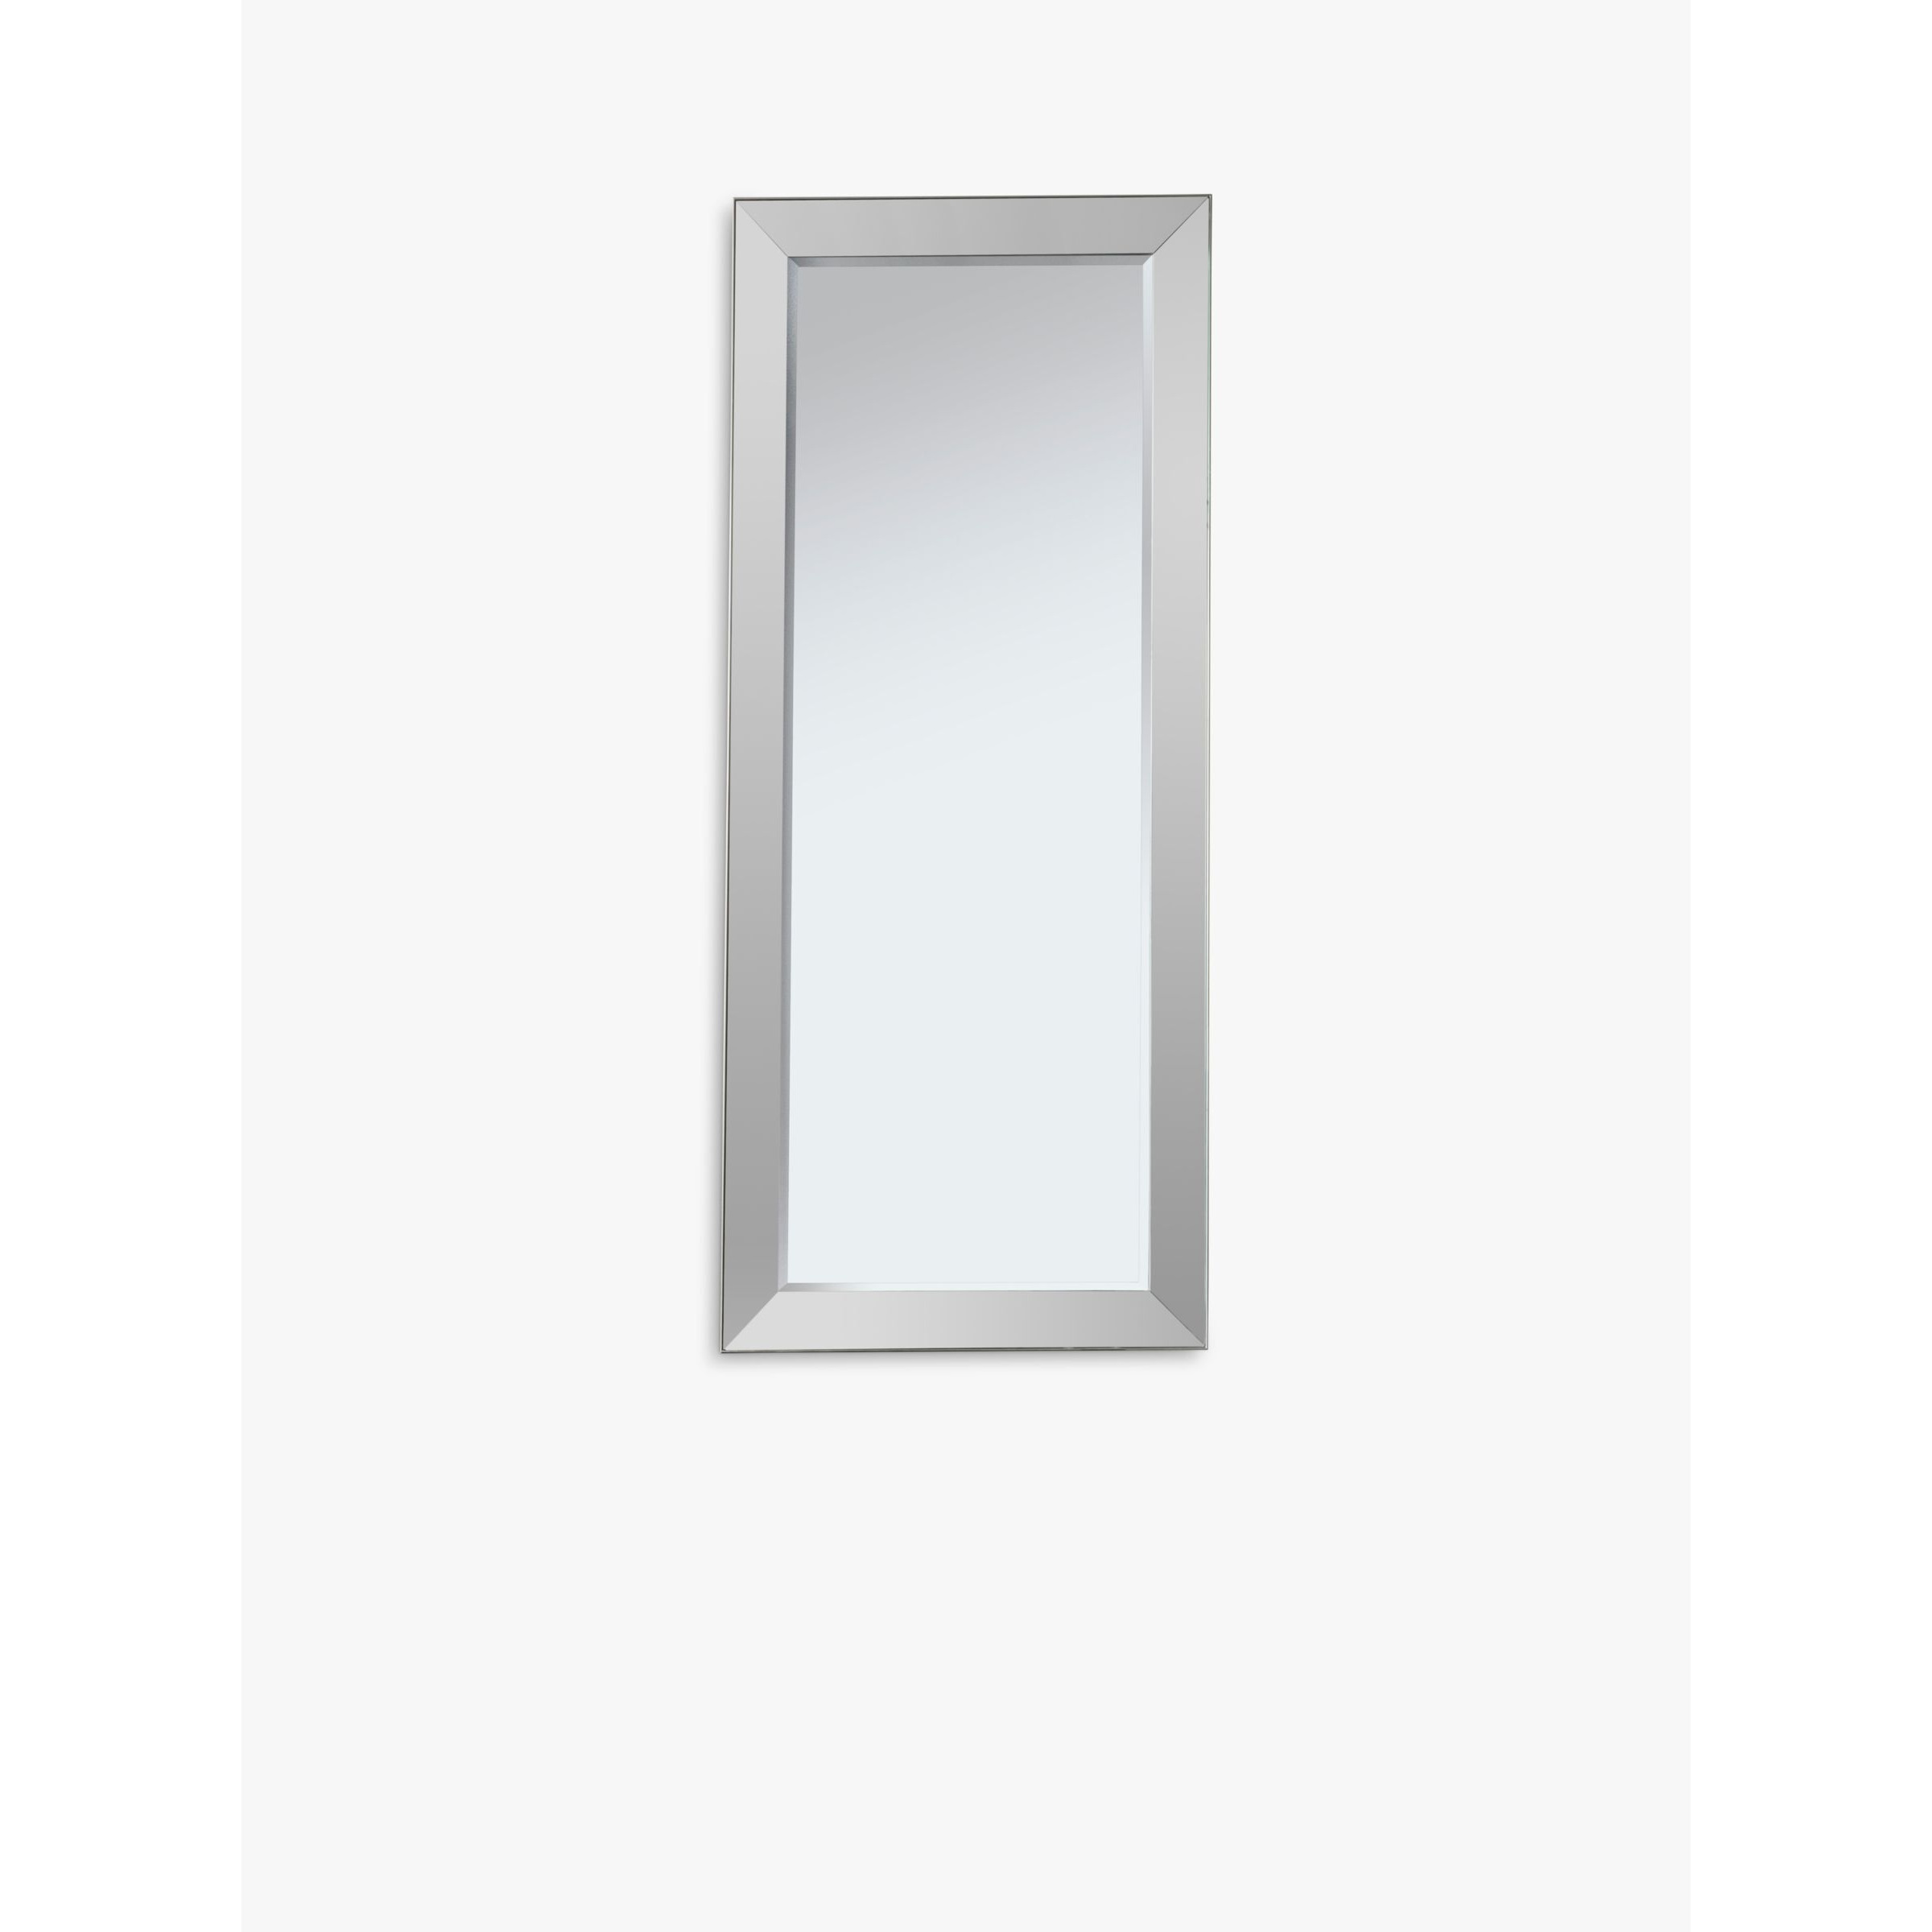 Gallery Direct Bertoni Rectangular Glass Frame Leaner Mirror, 190.5 x 81cm, Silver - image 1